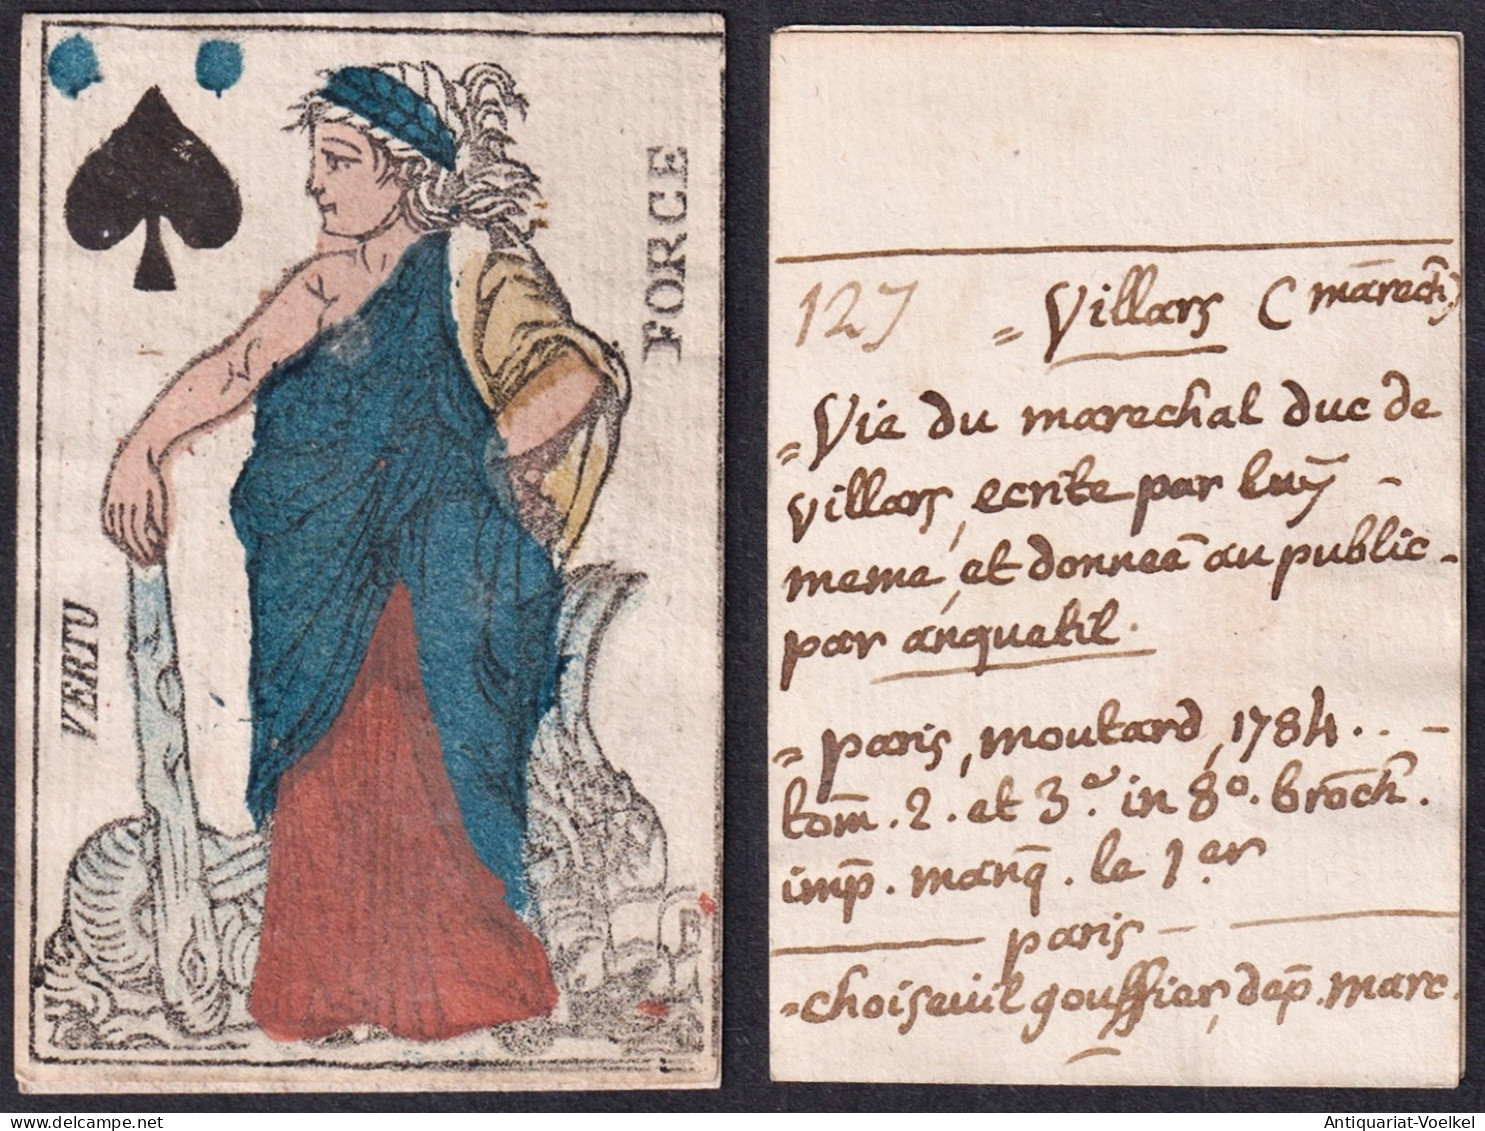 (Pik-Dame) - Queen Of Spades / Reine De Pique / Playing Card Carte A Jouer Spielkarte Cards Cartes - Oud Speelgoed